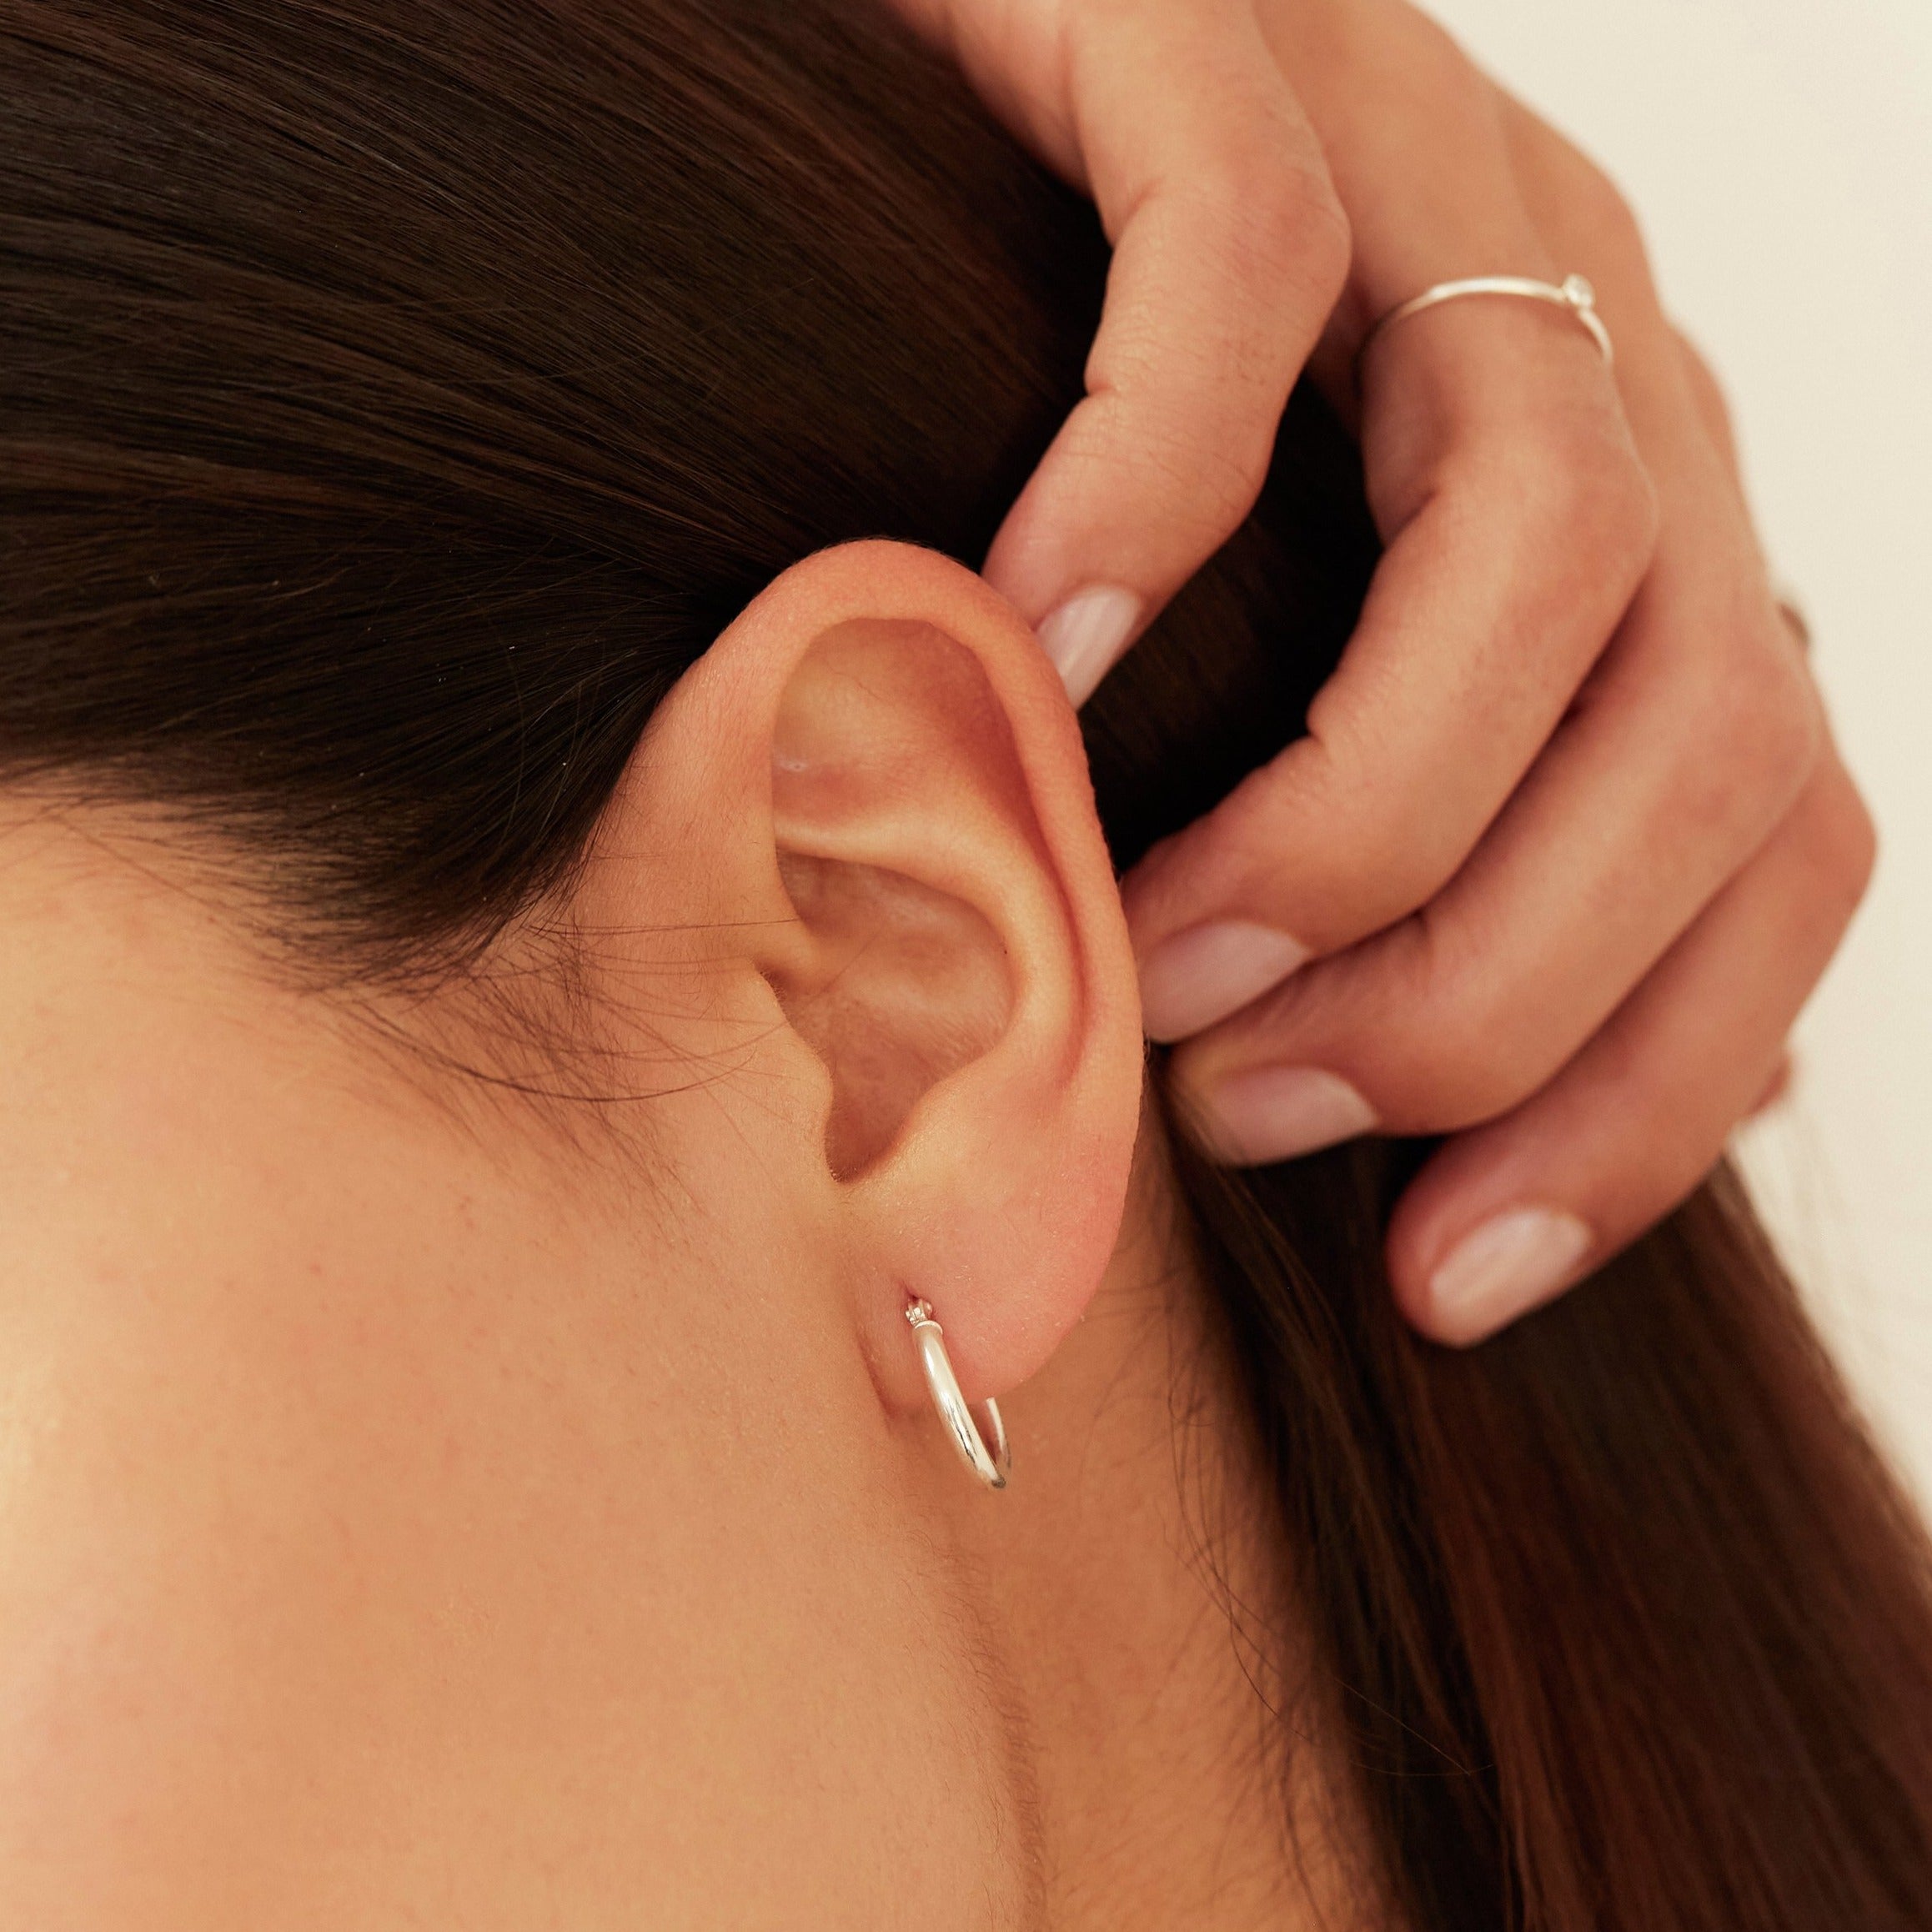 Silver small rounded hoop earring in one ear lobe